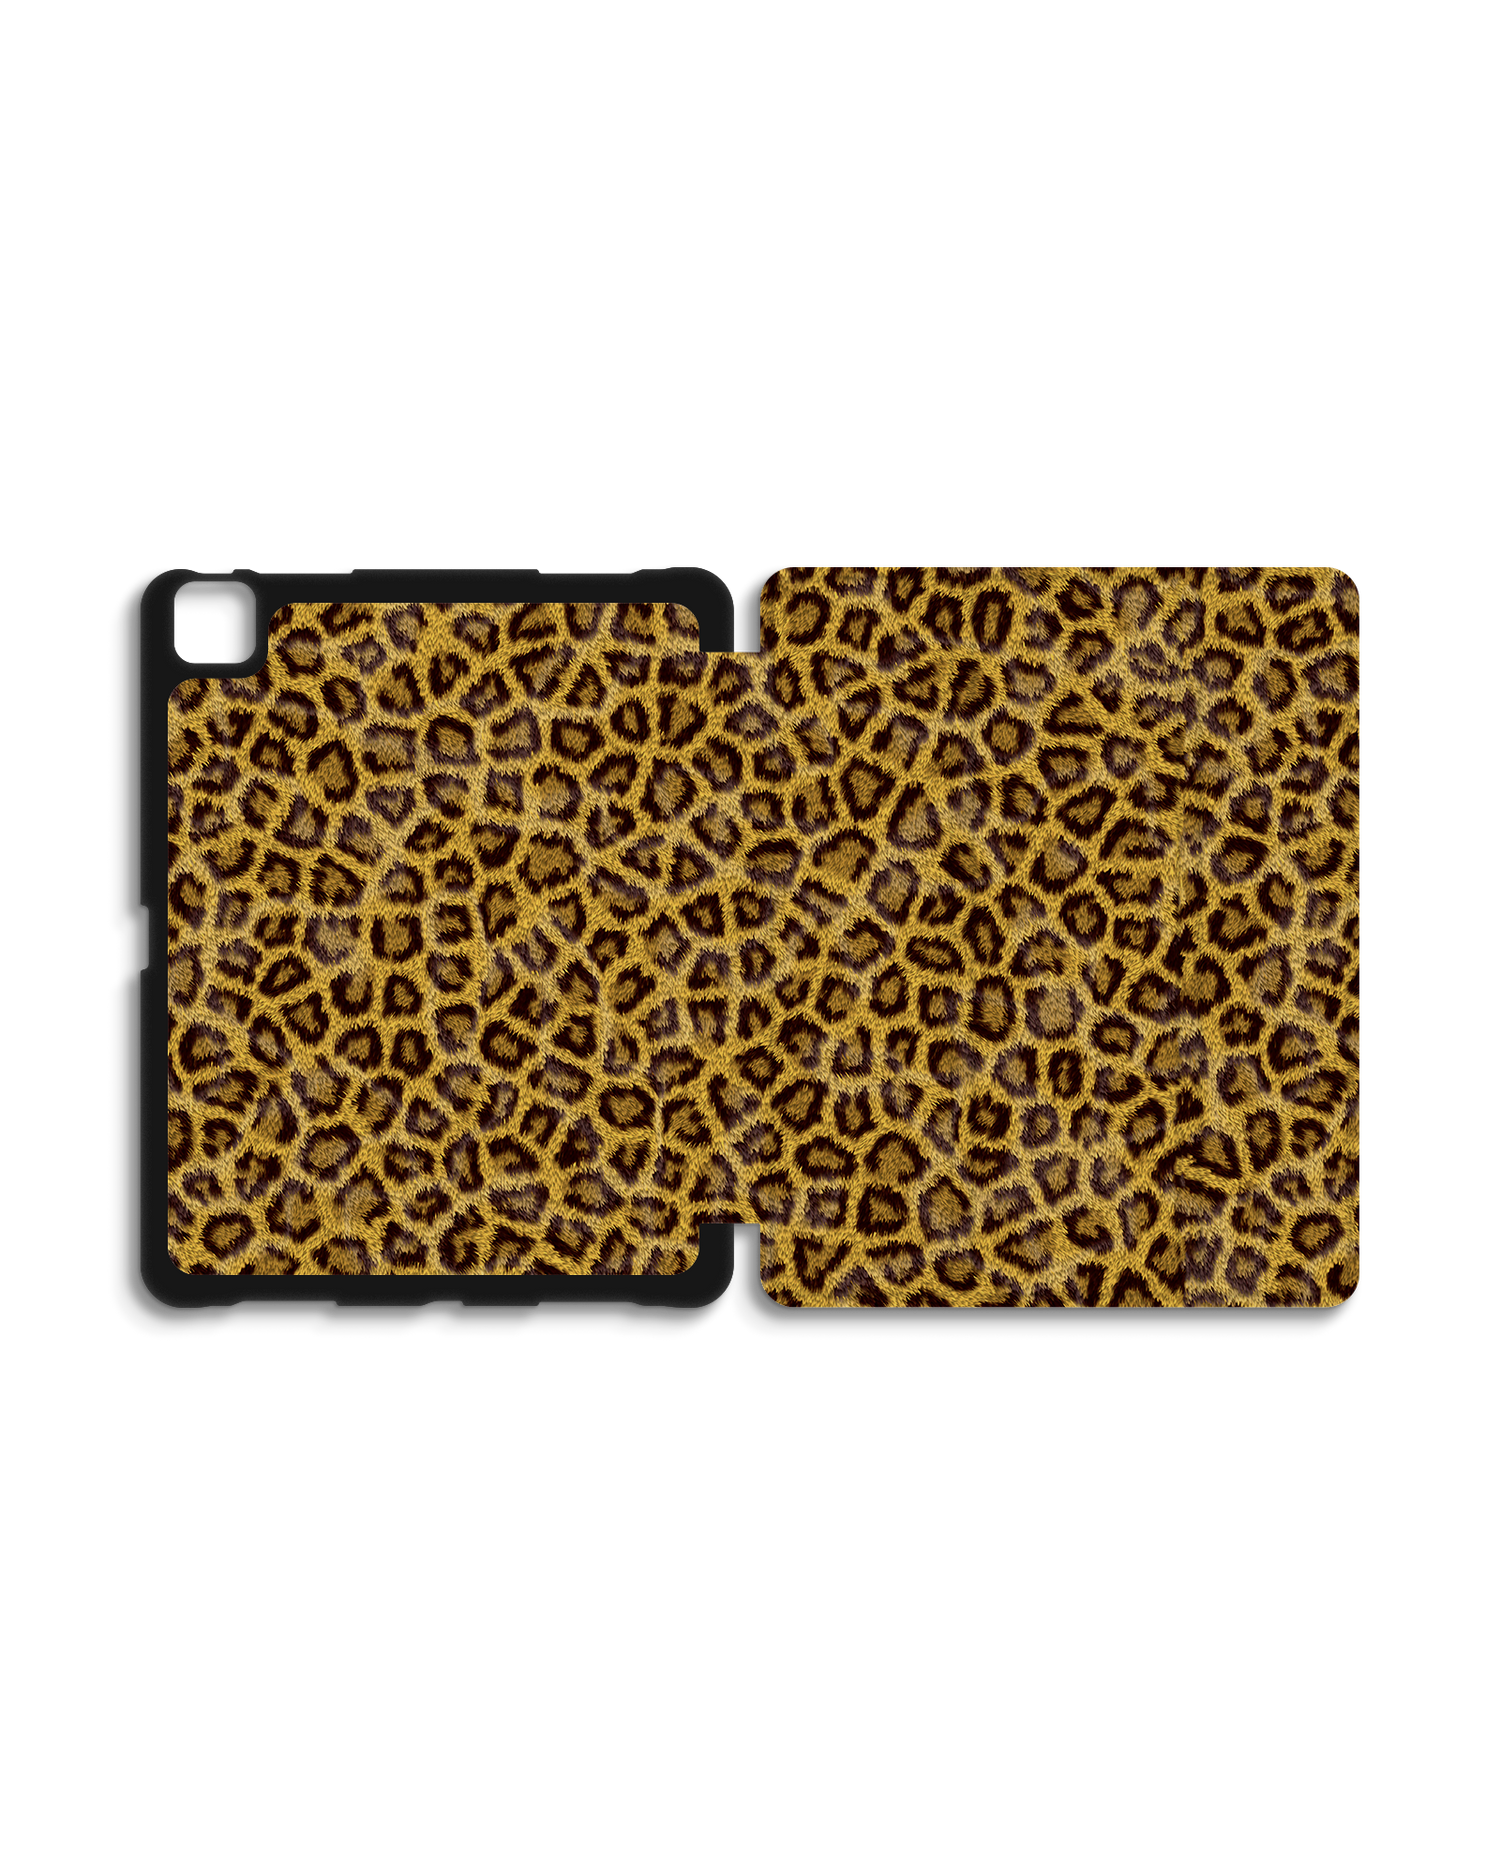 Leopard Skin iPad Hülle mit Stifthalter für Apple iPad Pro 6 12.9